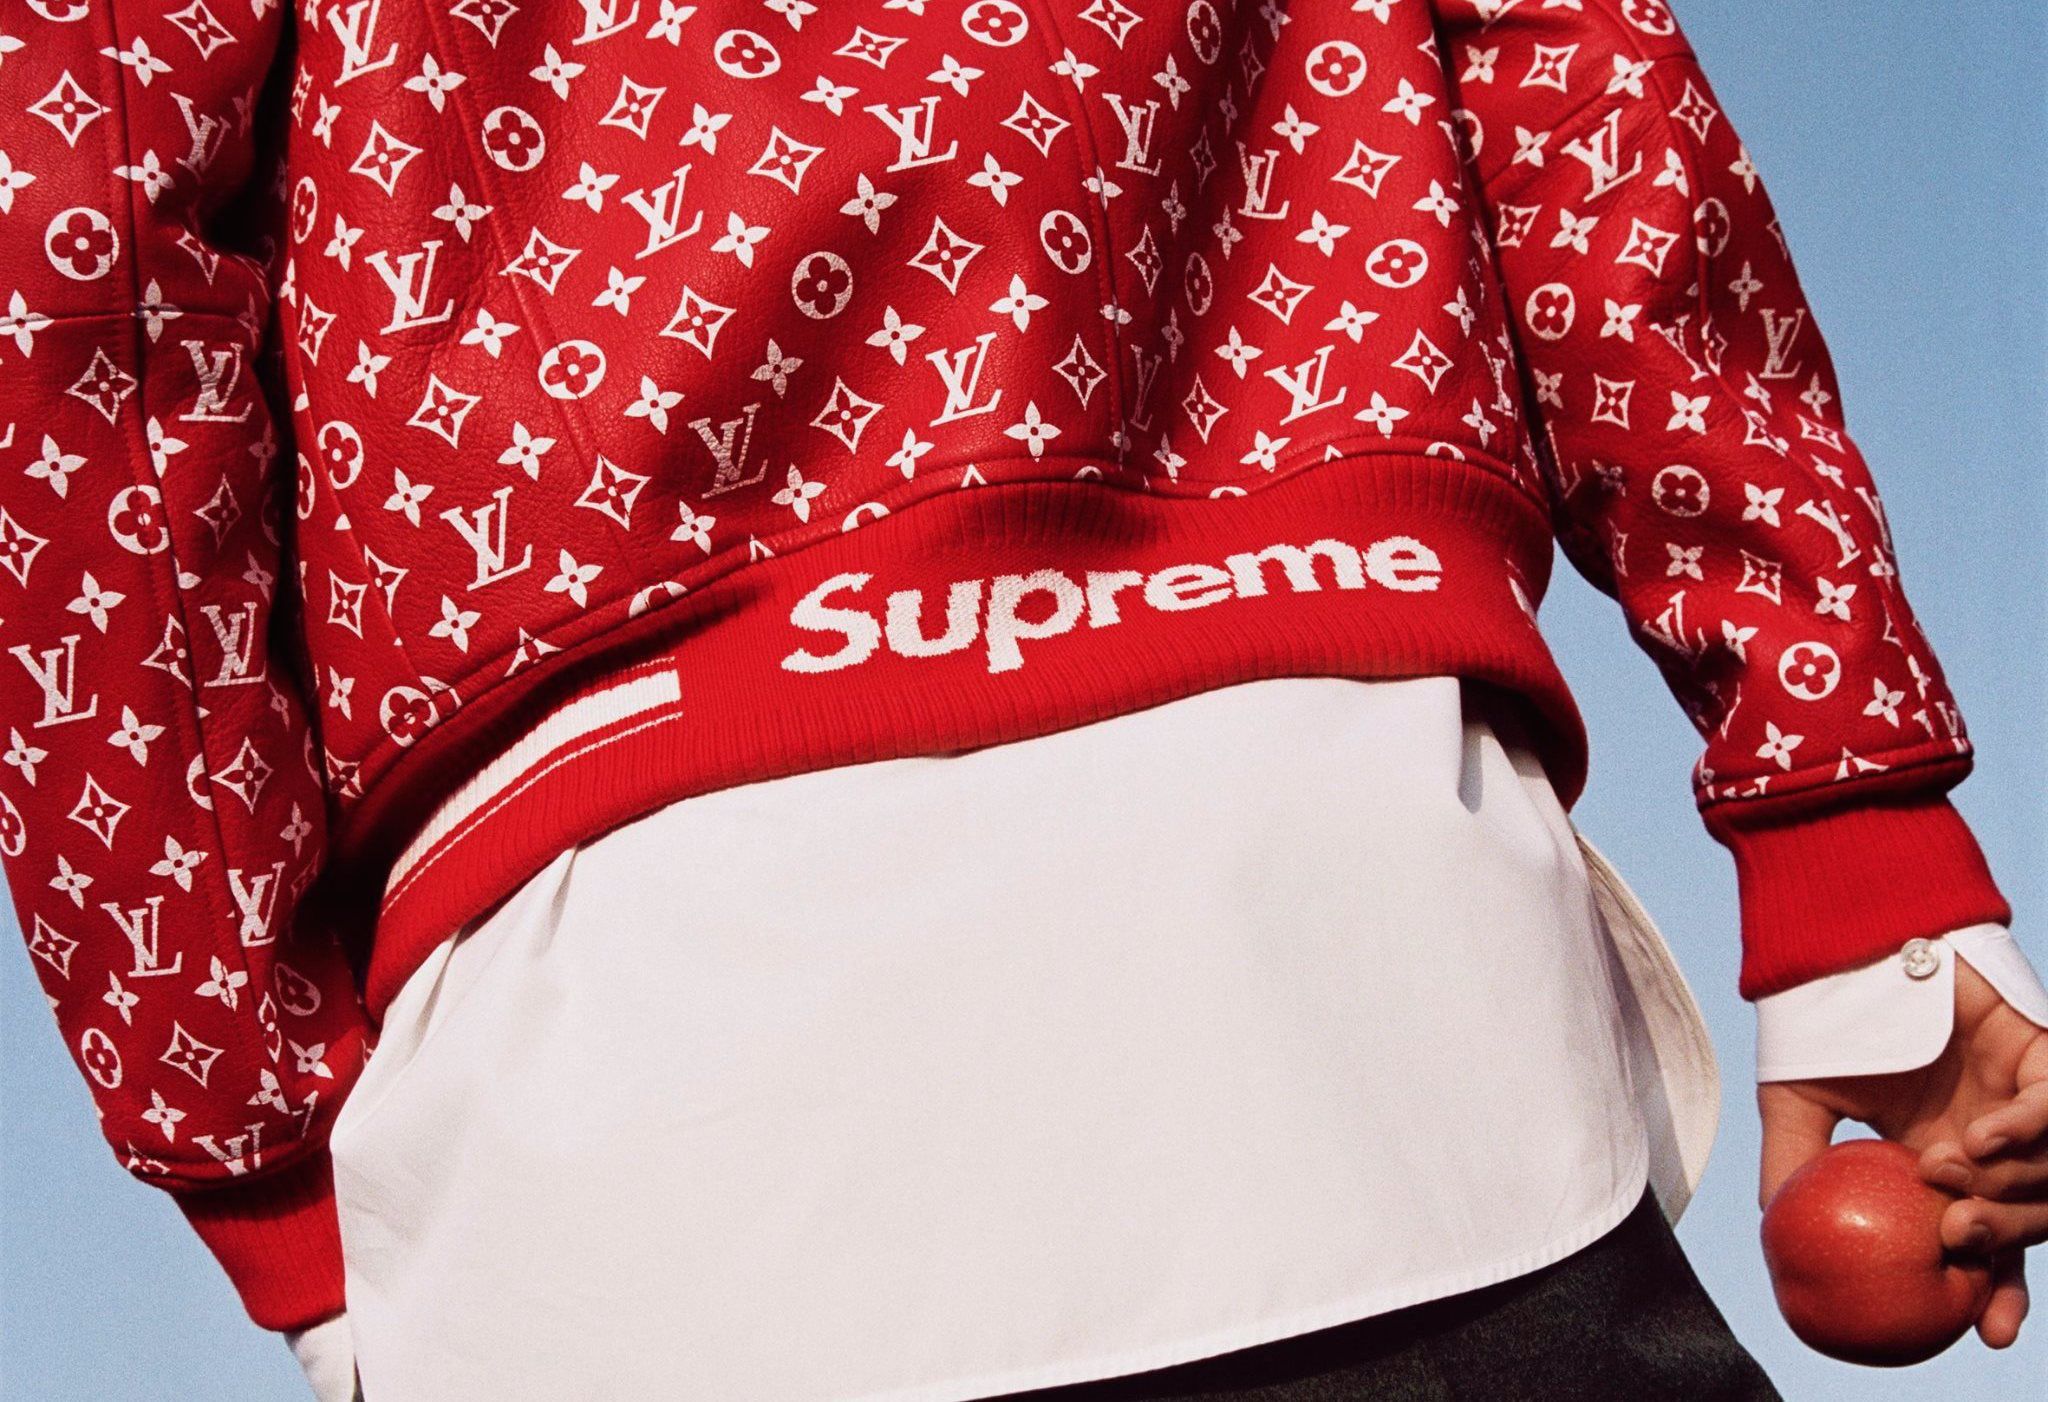 Supreme x Louis Vuitton Red Arc Logo Sweatshirt Small New